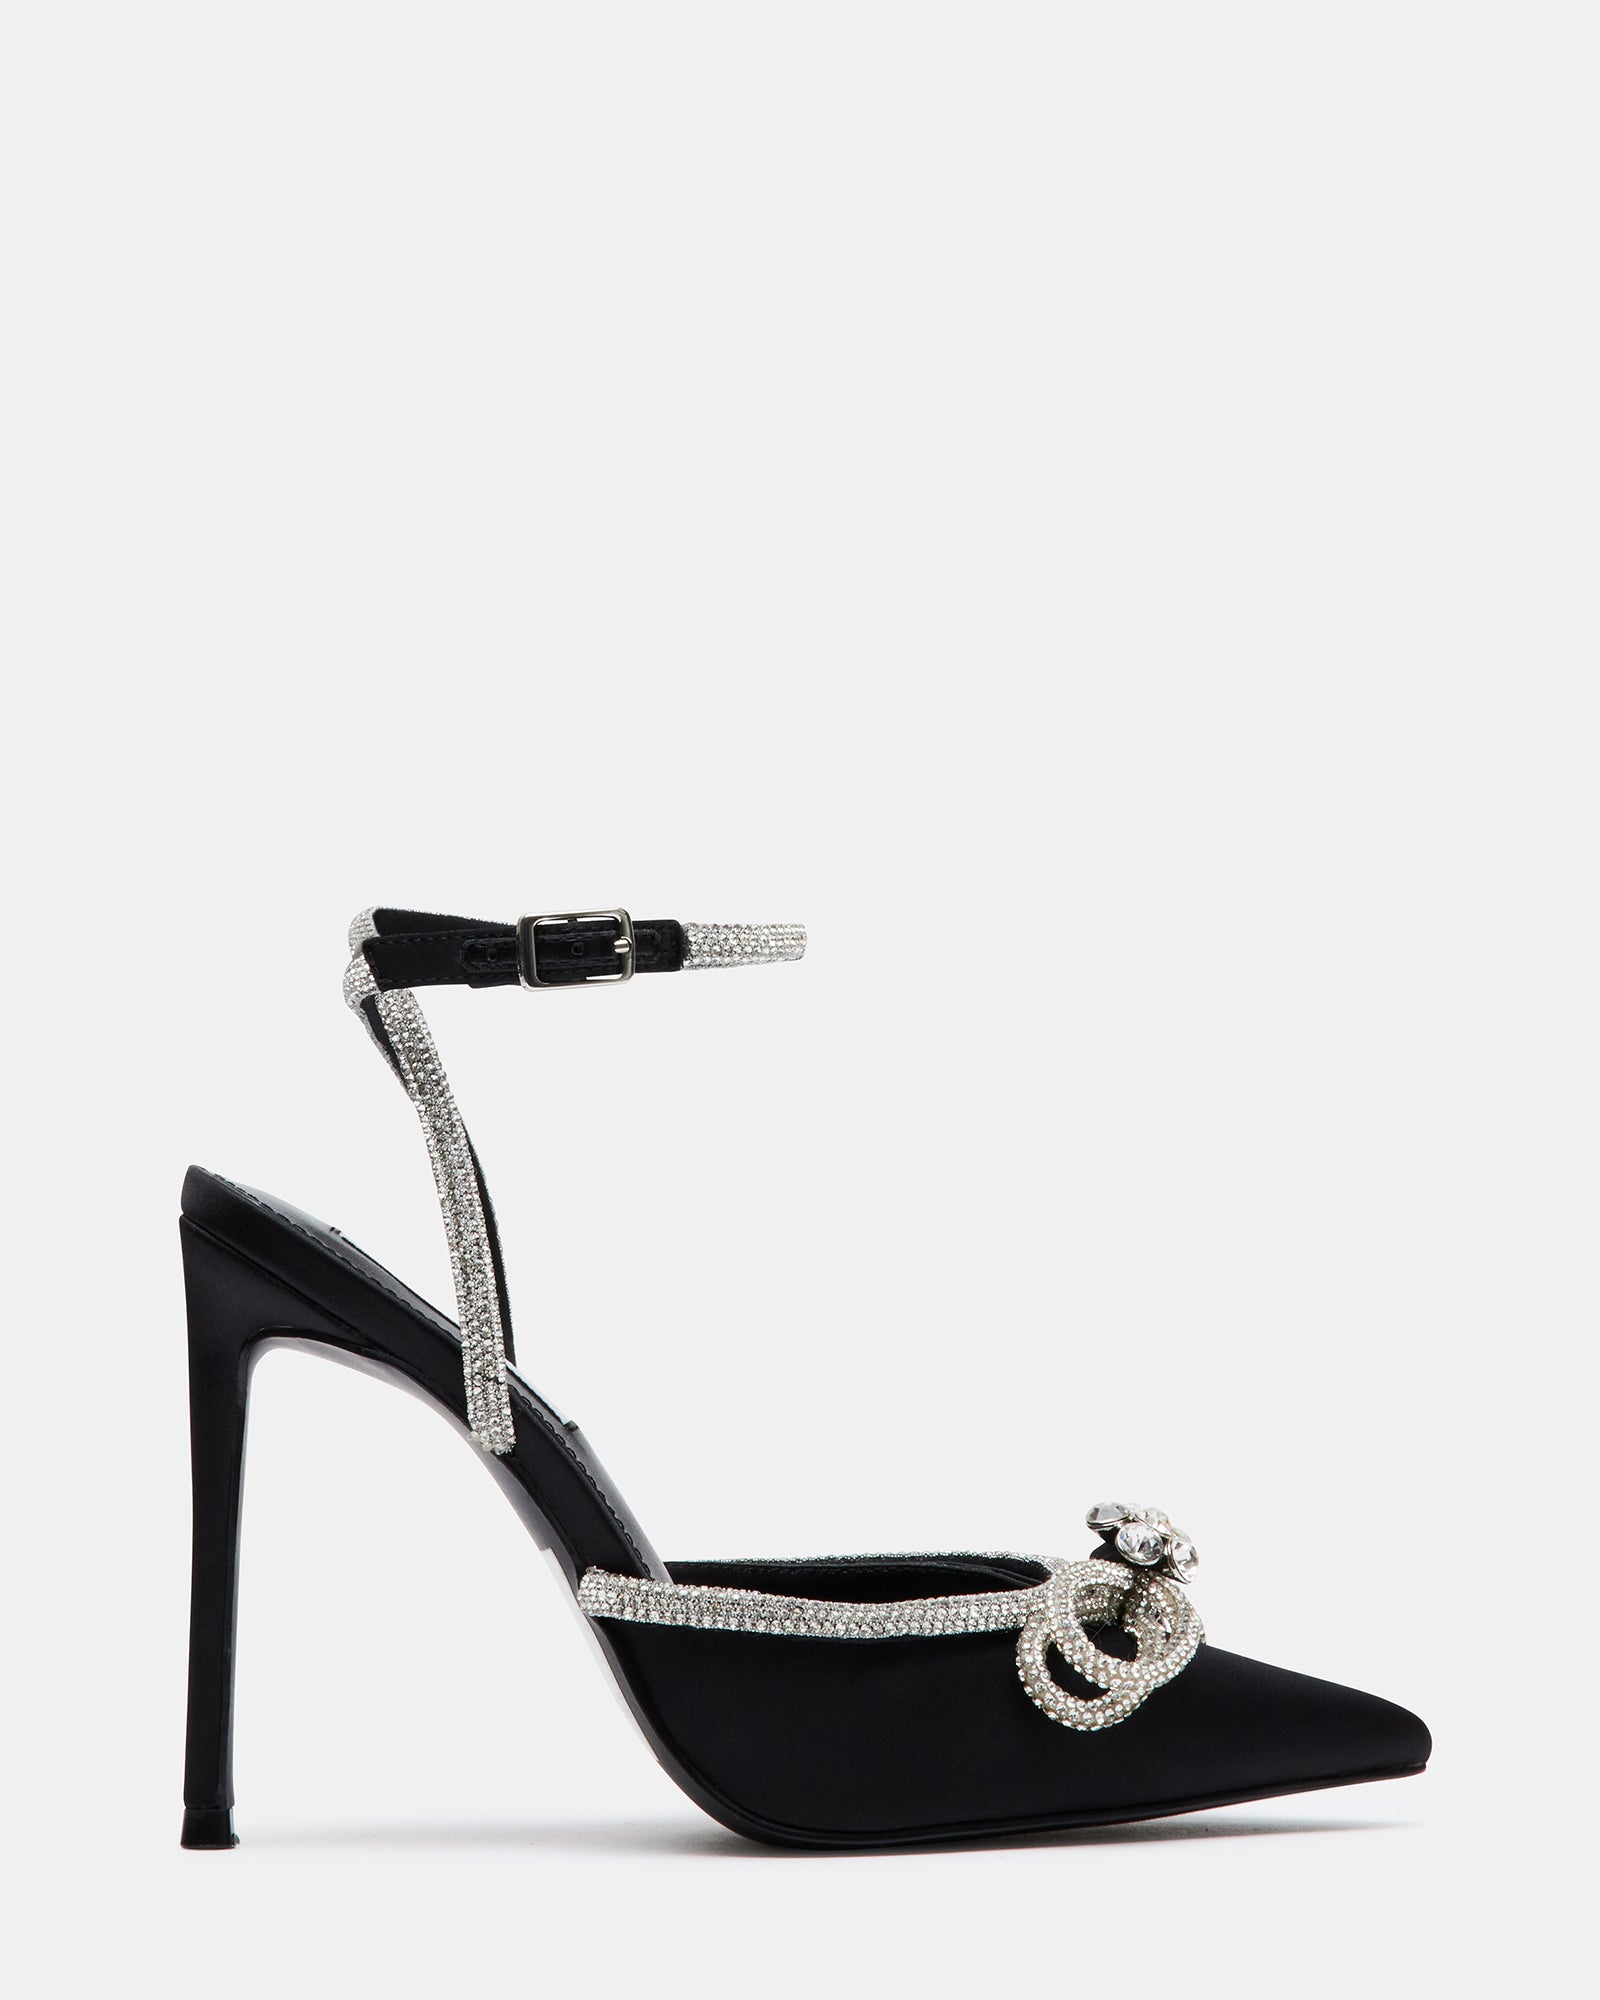 Gianni Bin Anselle Black High Heel Strap Shoes, Size 9, Prom Shoes, 4-Inch  Heel | eBay